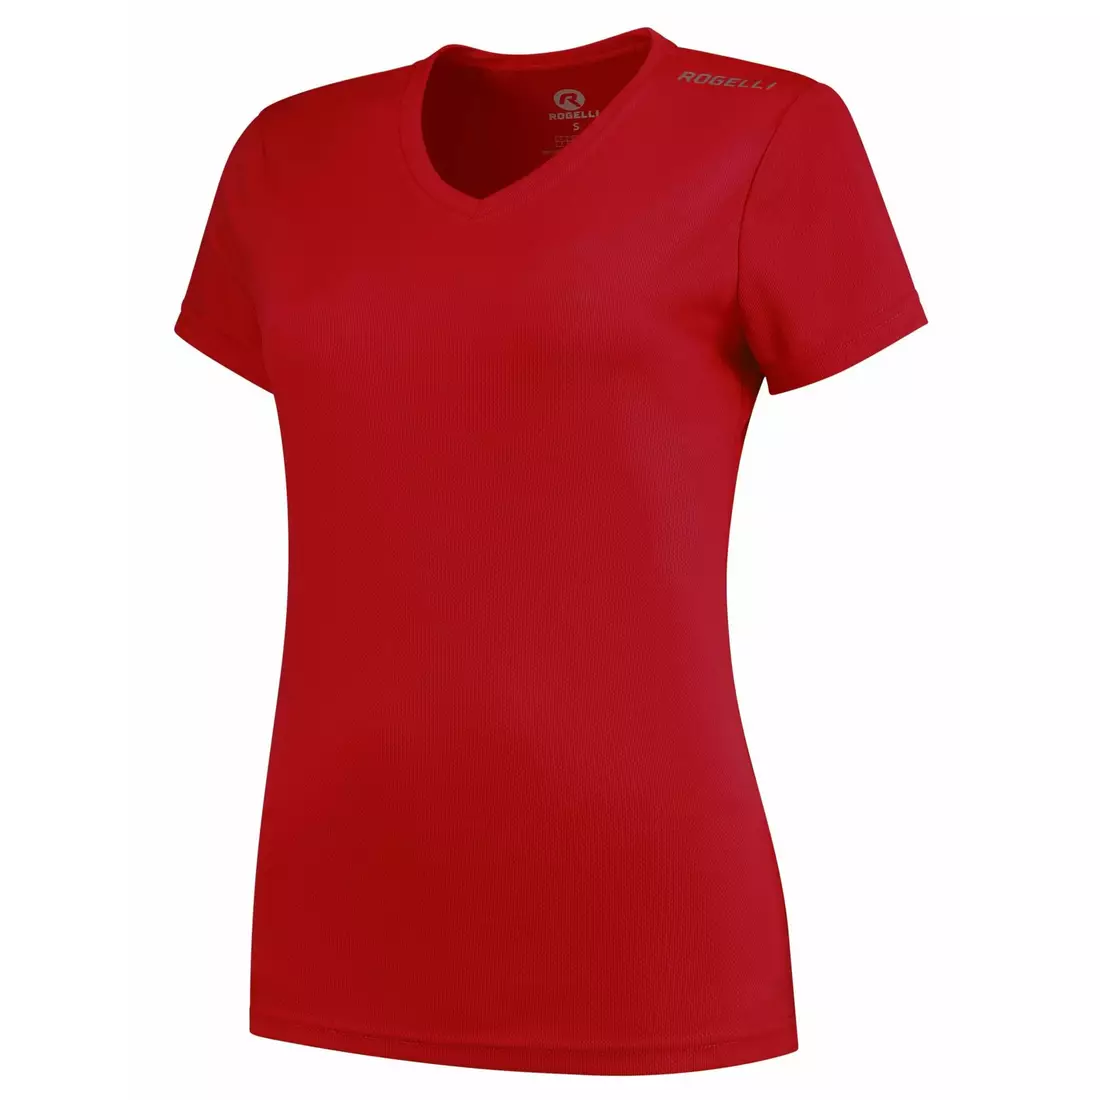 ROGELLI Women's sports t-shirt Promo red  